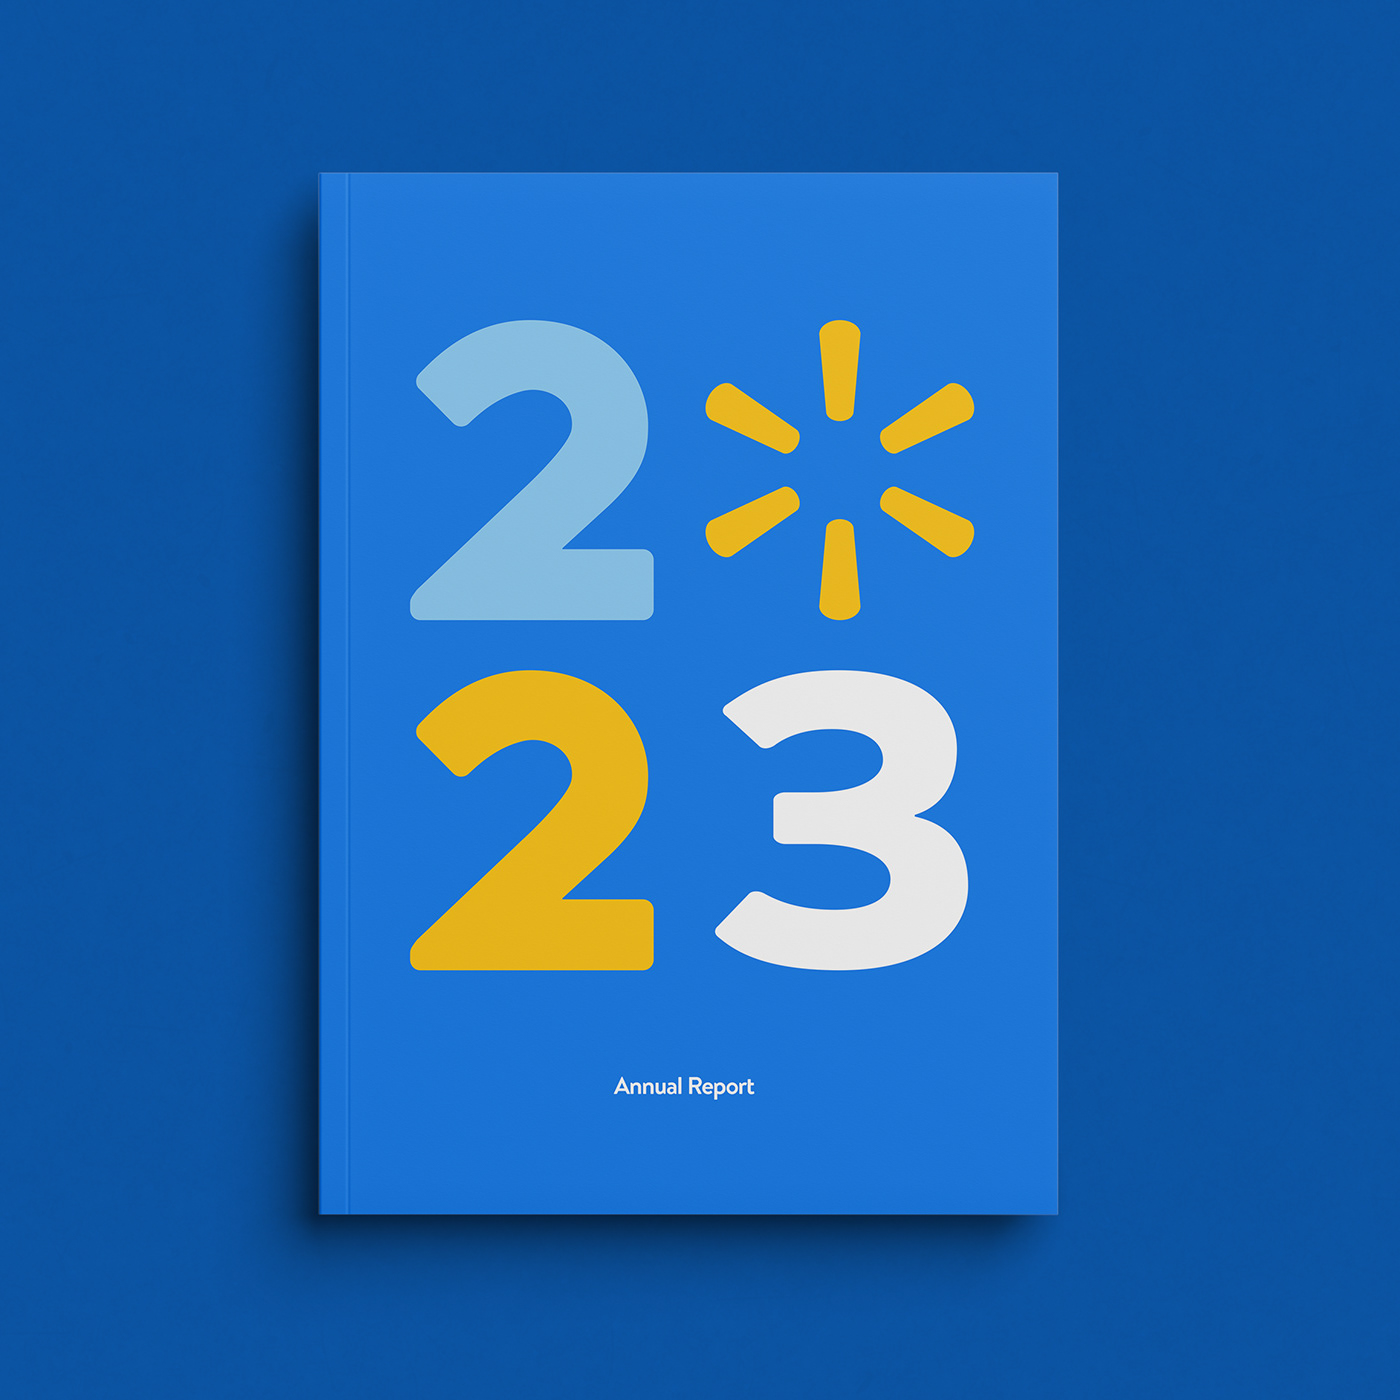 Walmart 2023 Annual Report on Behance